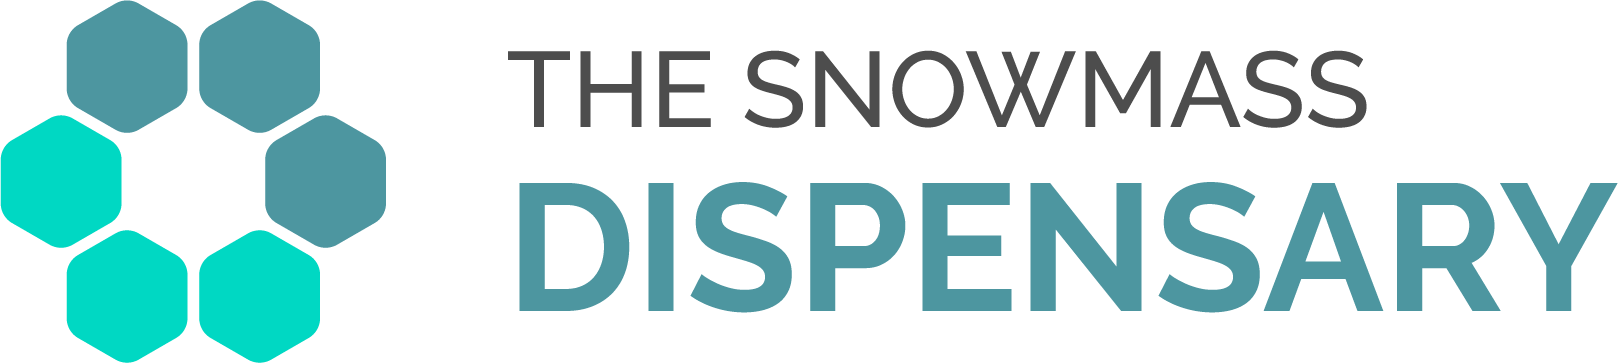 The Snowmass Dispensary Logo